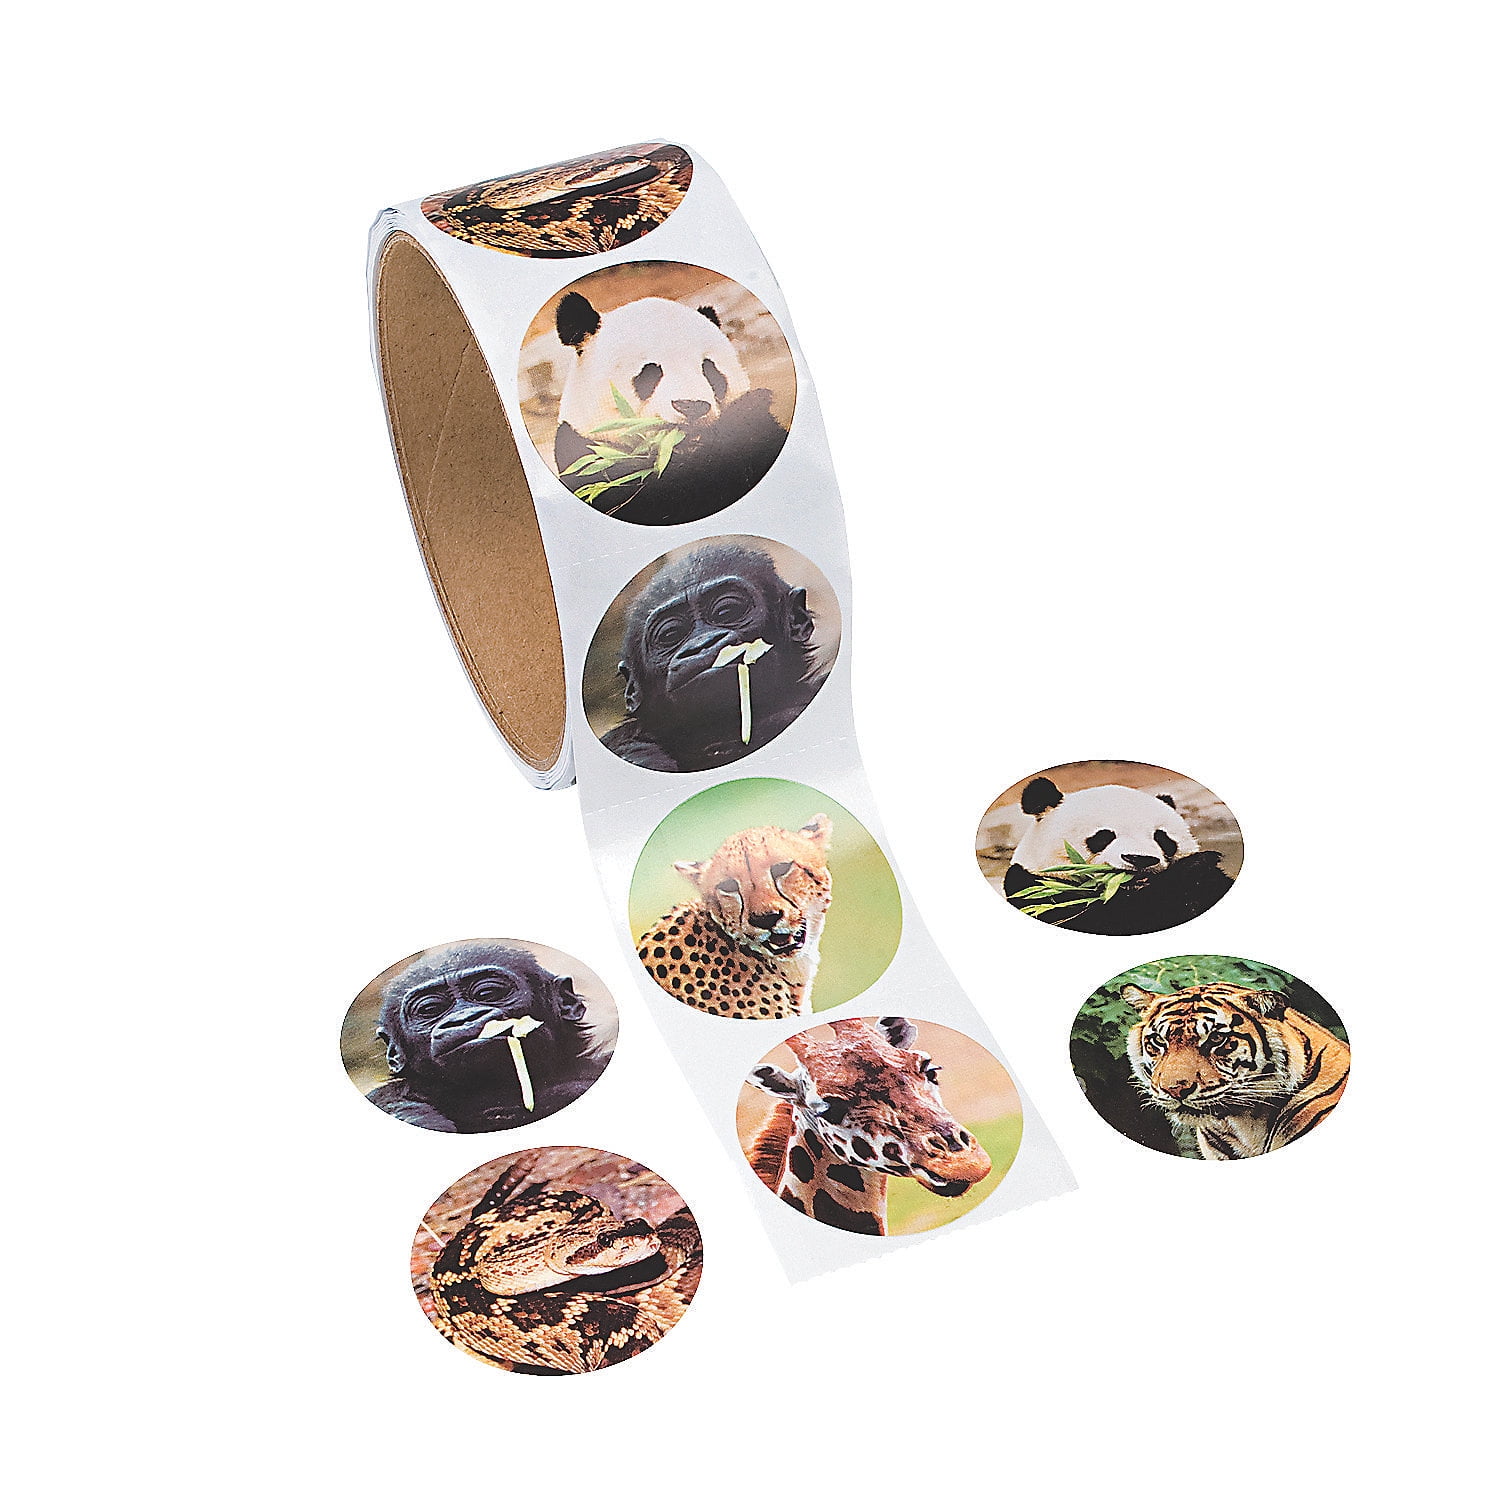 Happy Zoo Animal Retro Stationery Sticker Pack/2 Patterns/Handbook Stickers  - Shop yabeezoo Stickers - Pinkoi